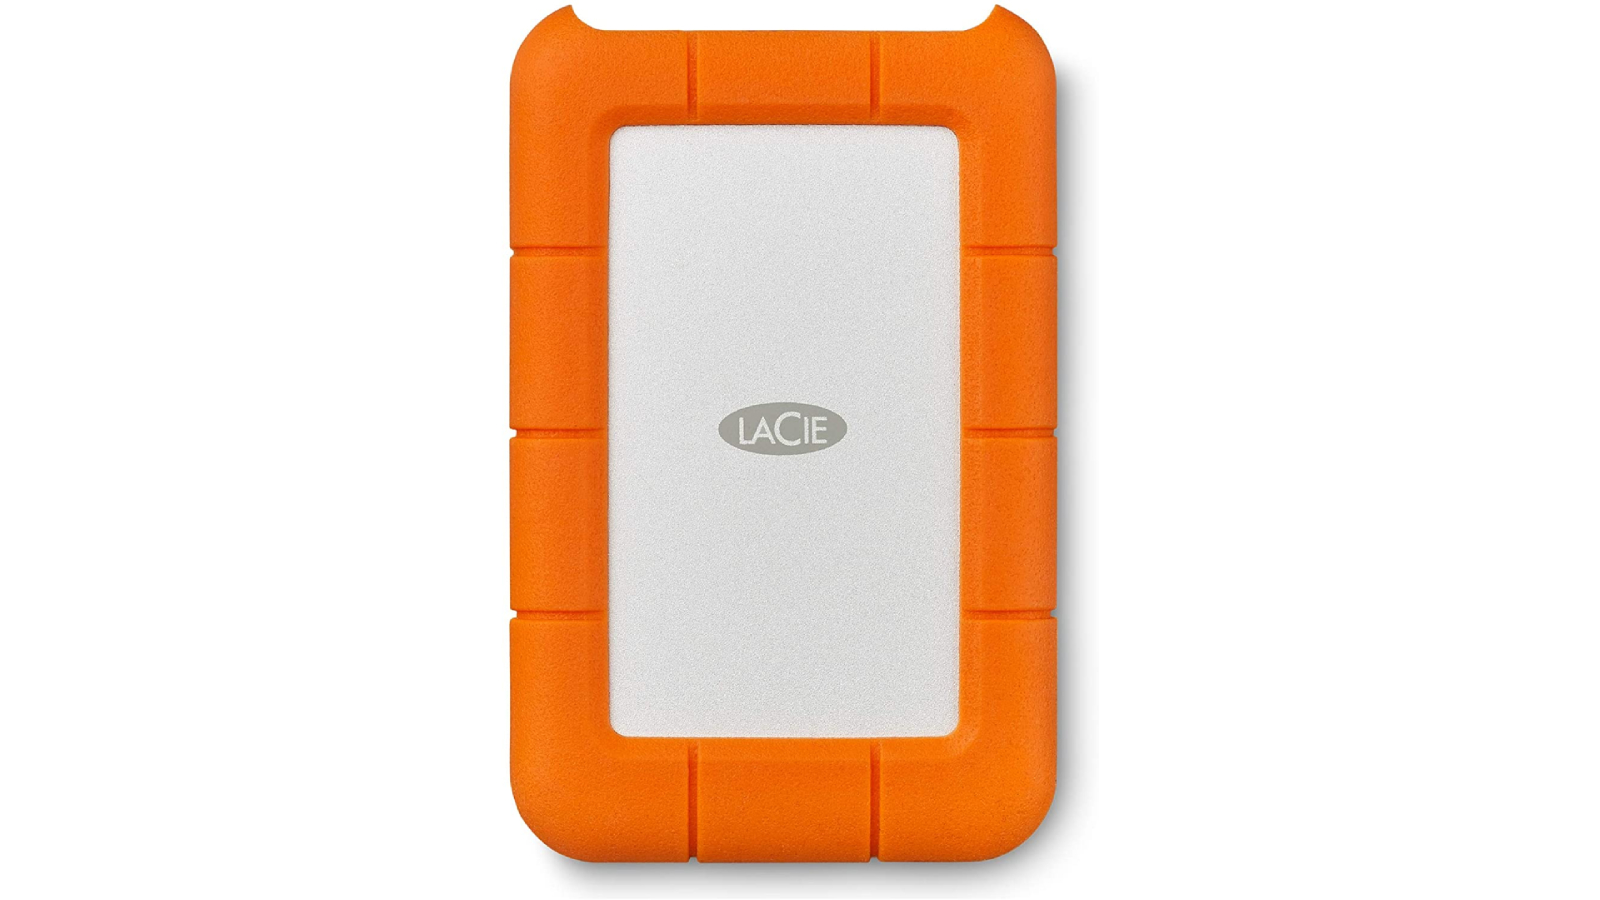 LaCie Rugged Mini 1TB External Hard Drive Portable HDD Cyber Monday Deal